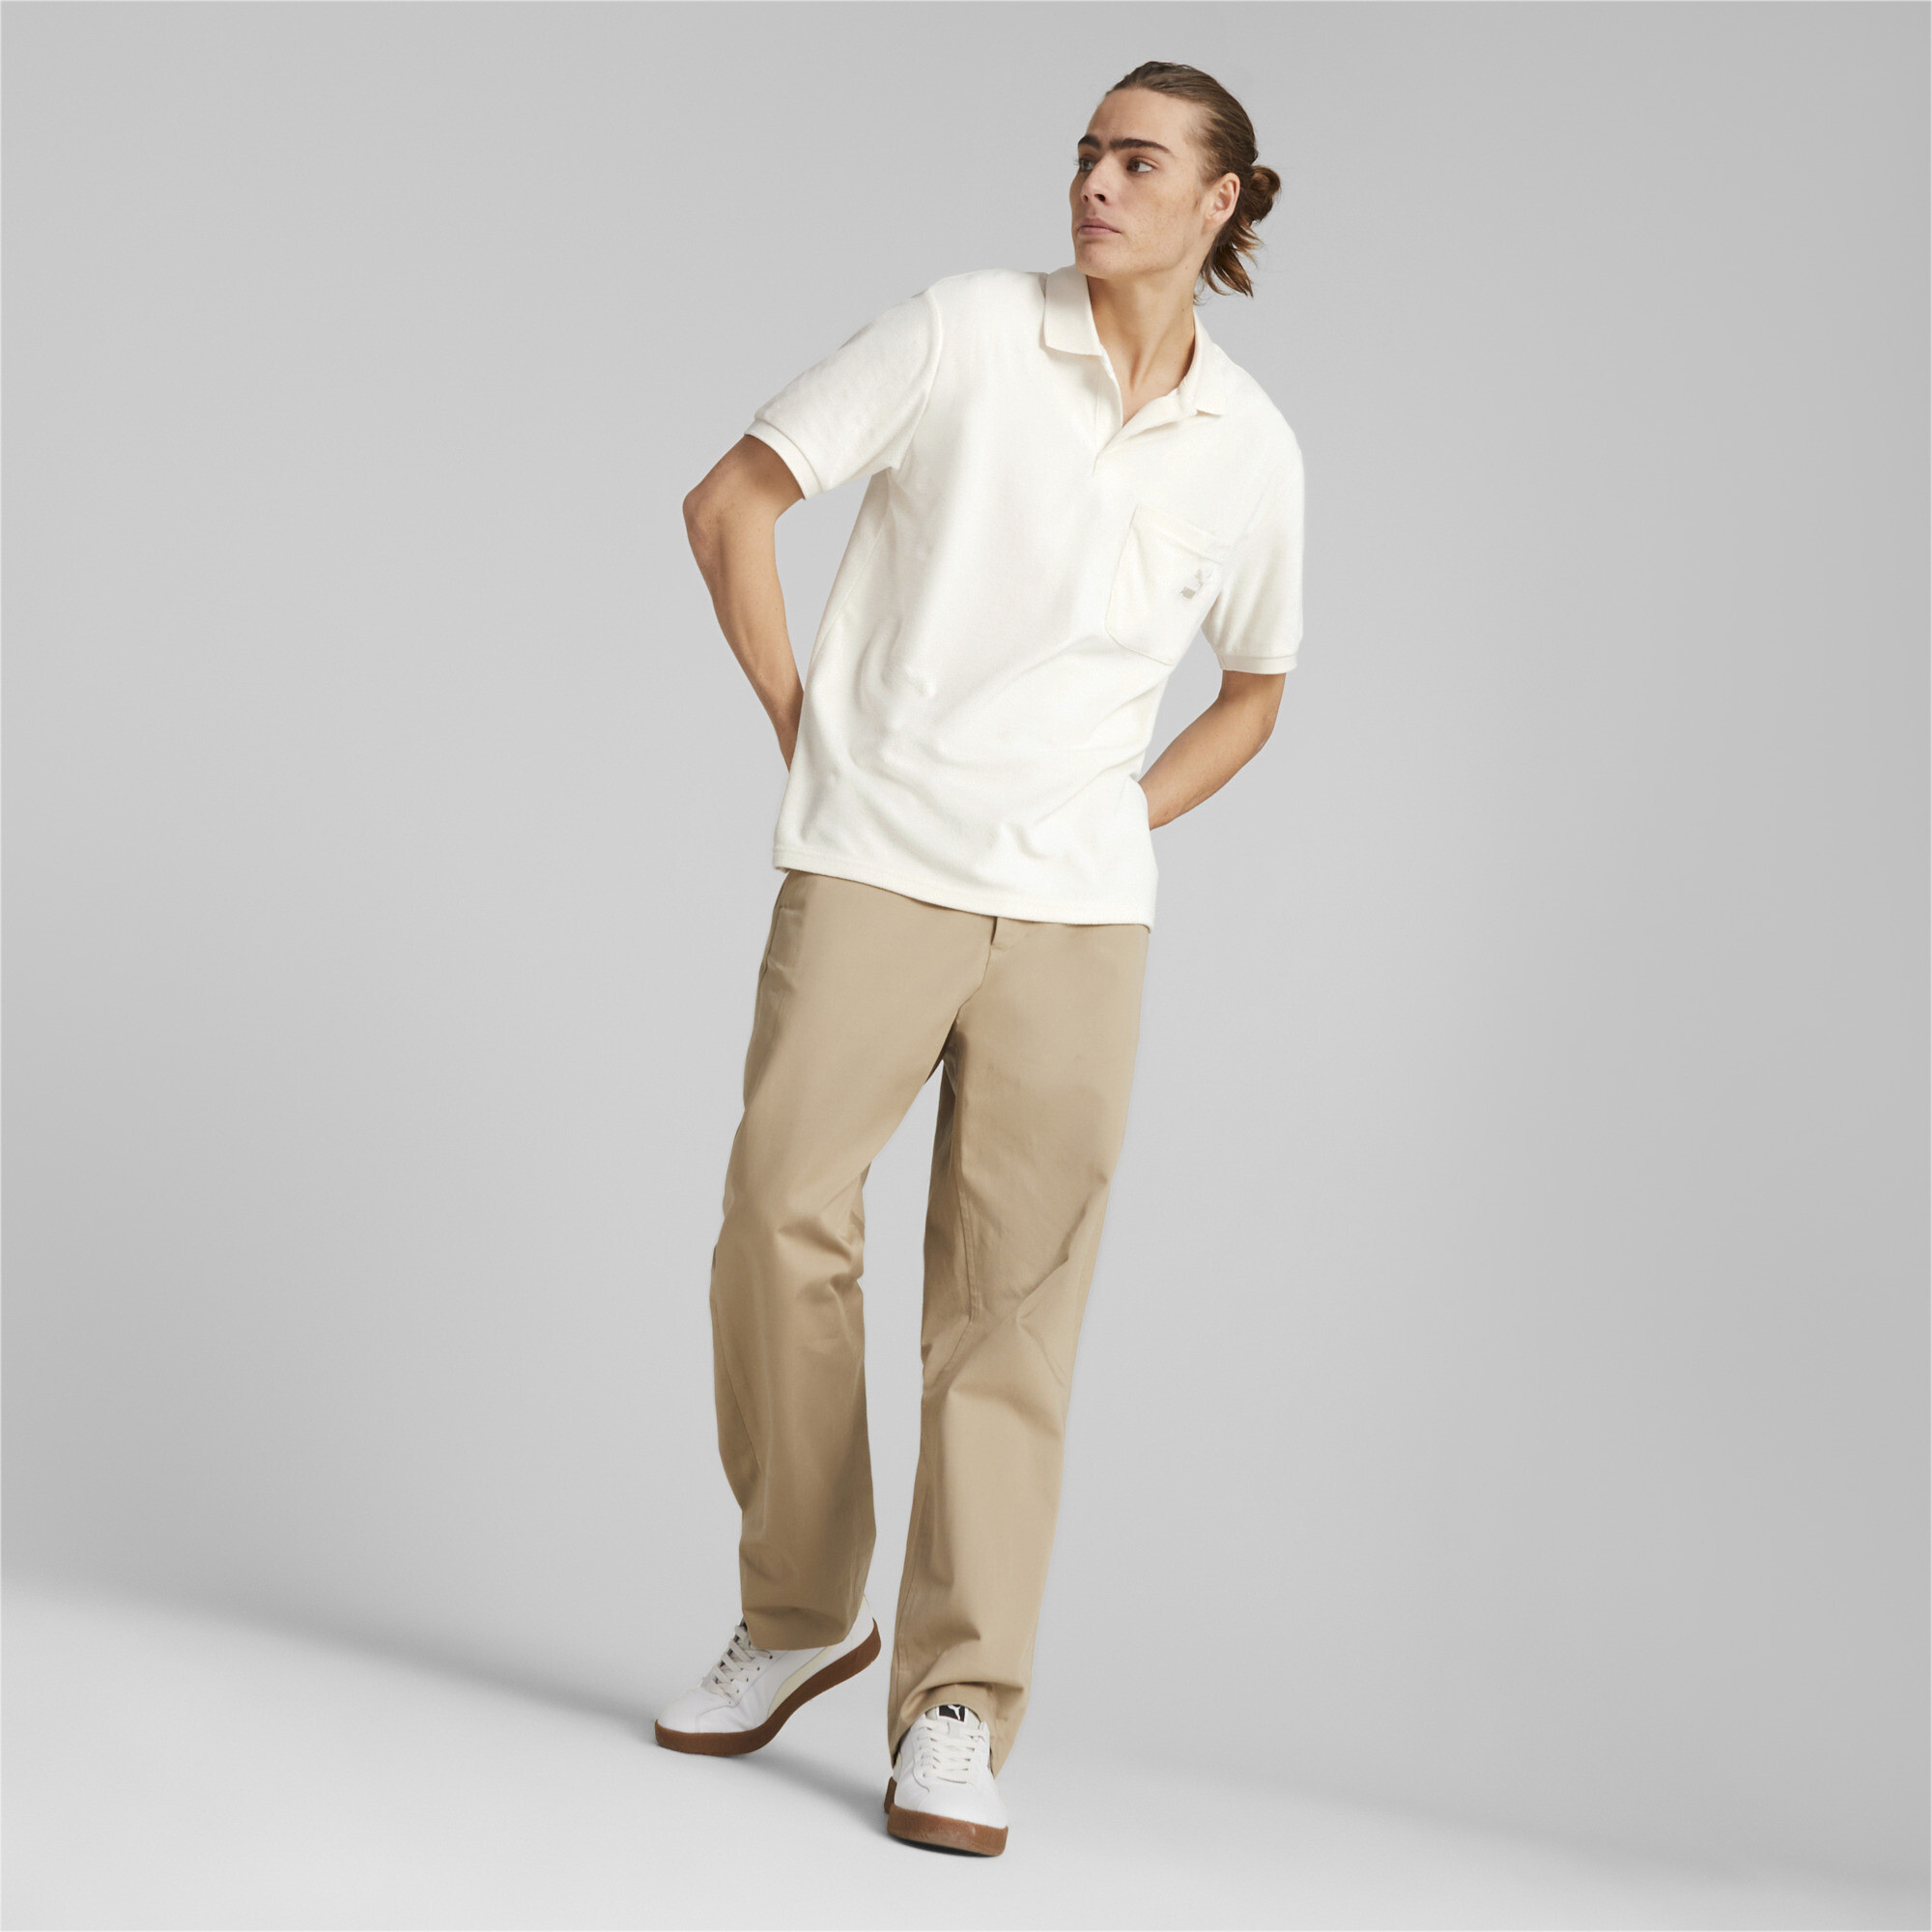 Men's Puma Classics Towelling Polo Shirt T-Shirt, White T-Shirt, Size XL T-Shirt, Clothing